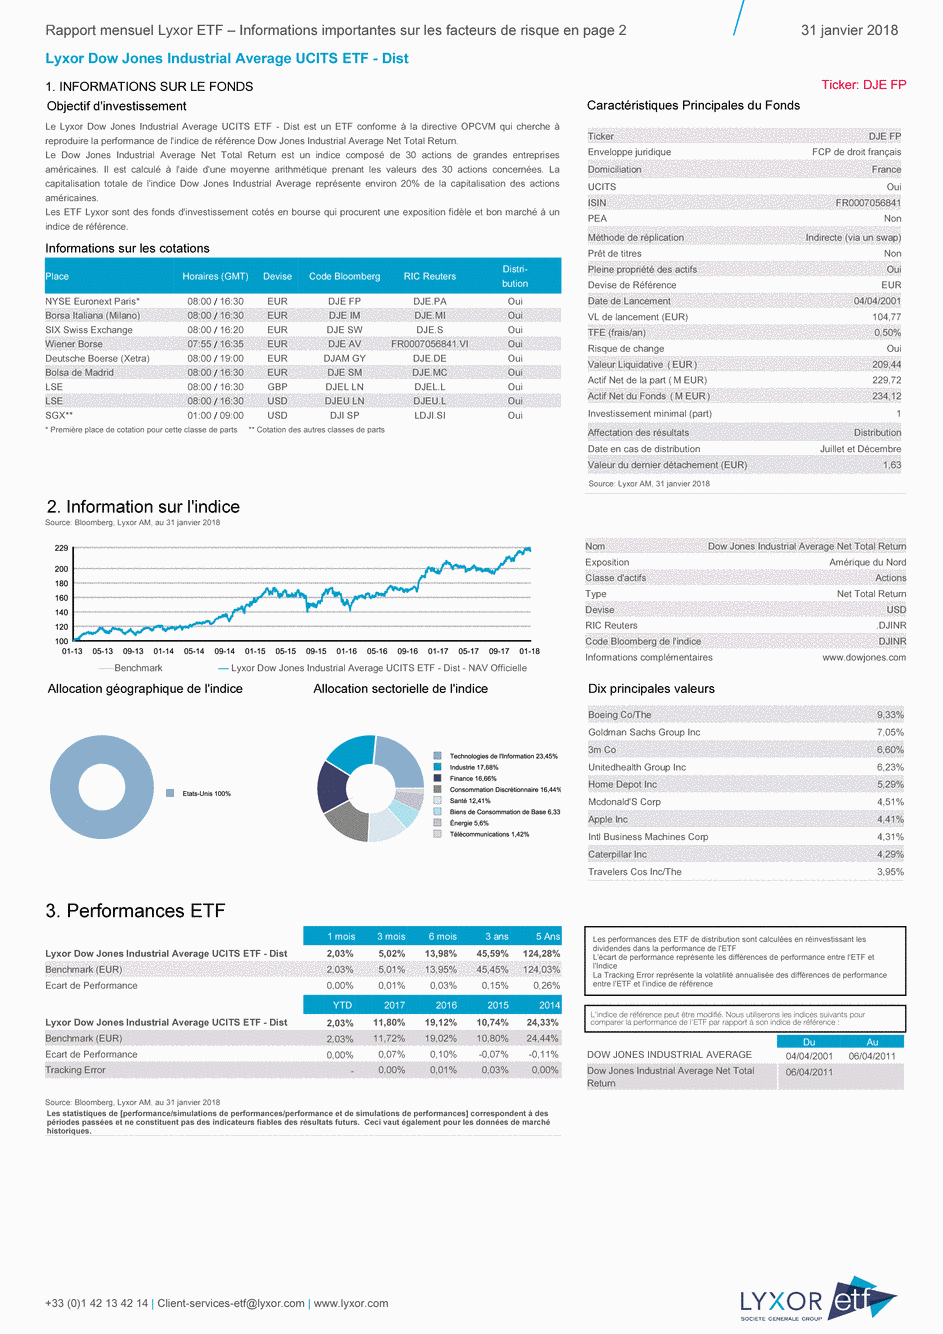 Reporting Lyxor Dow Jones Industrial Average UCITS ETF - Dist - 31/01/2018 - Français